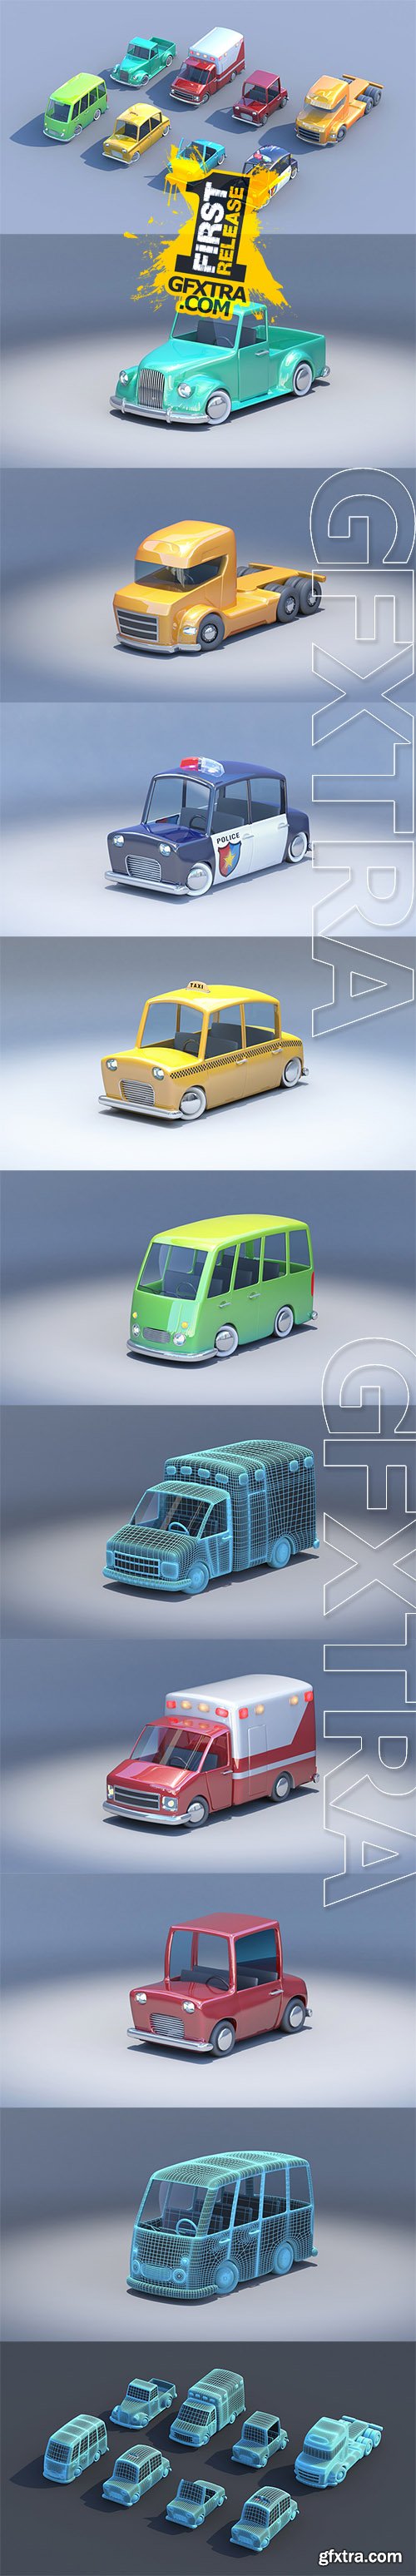 Cubebrush - Toycar Pack